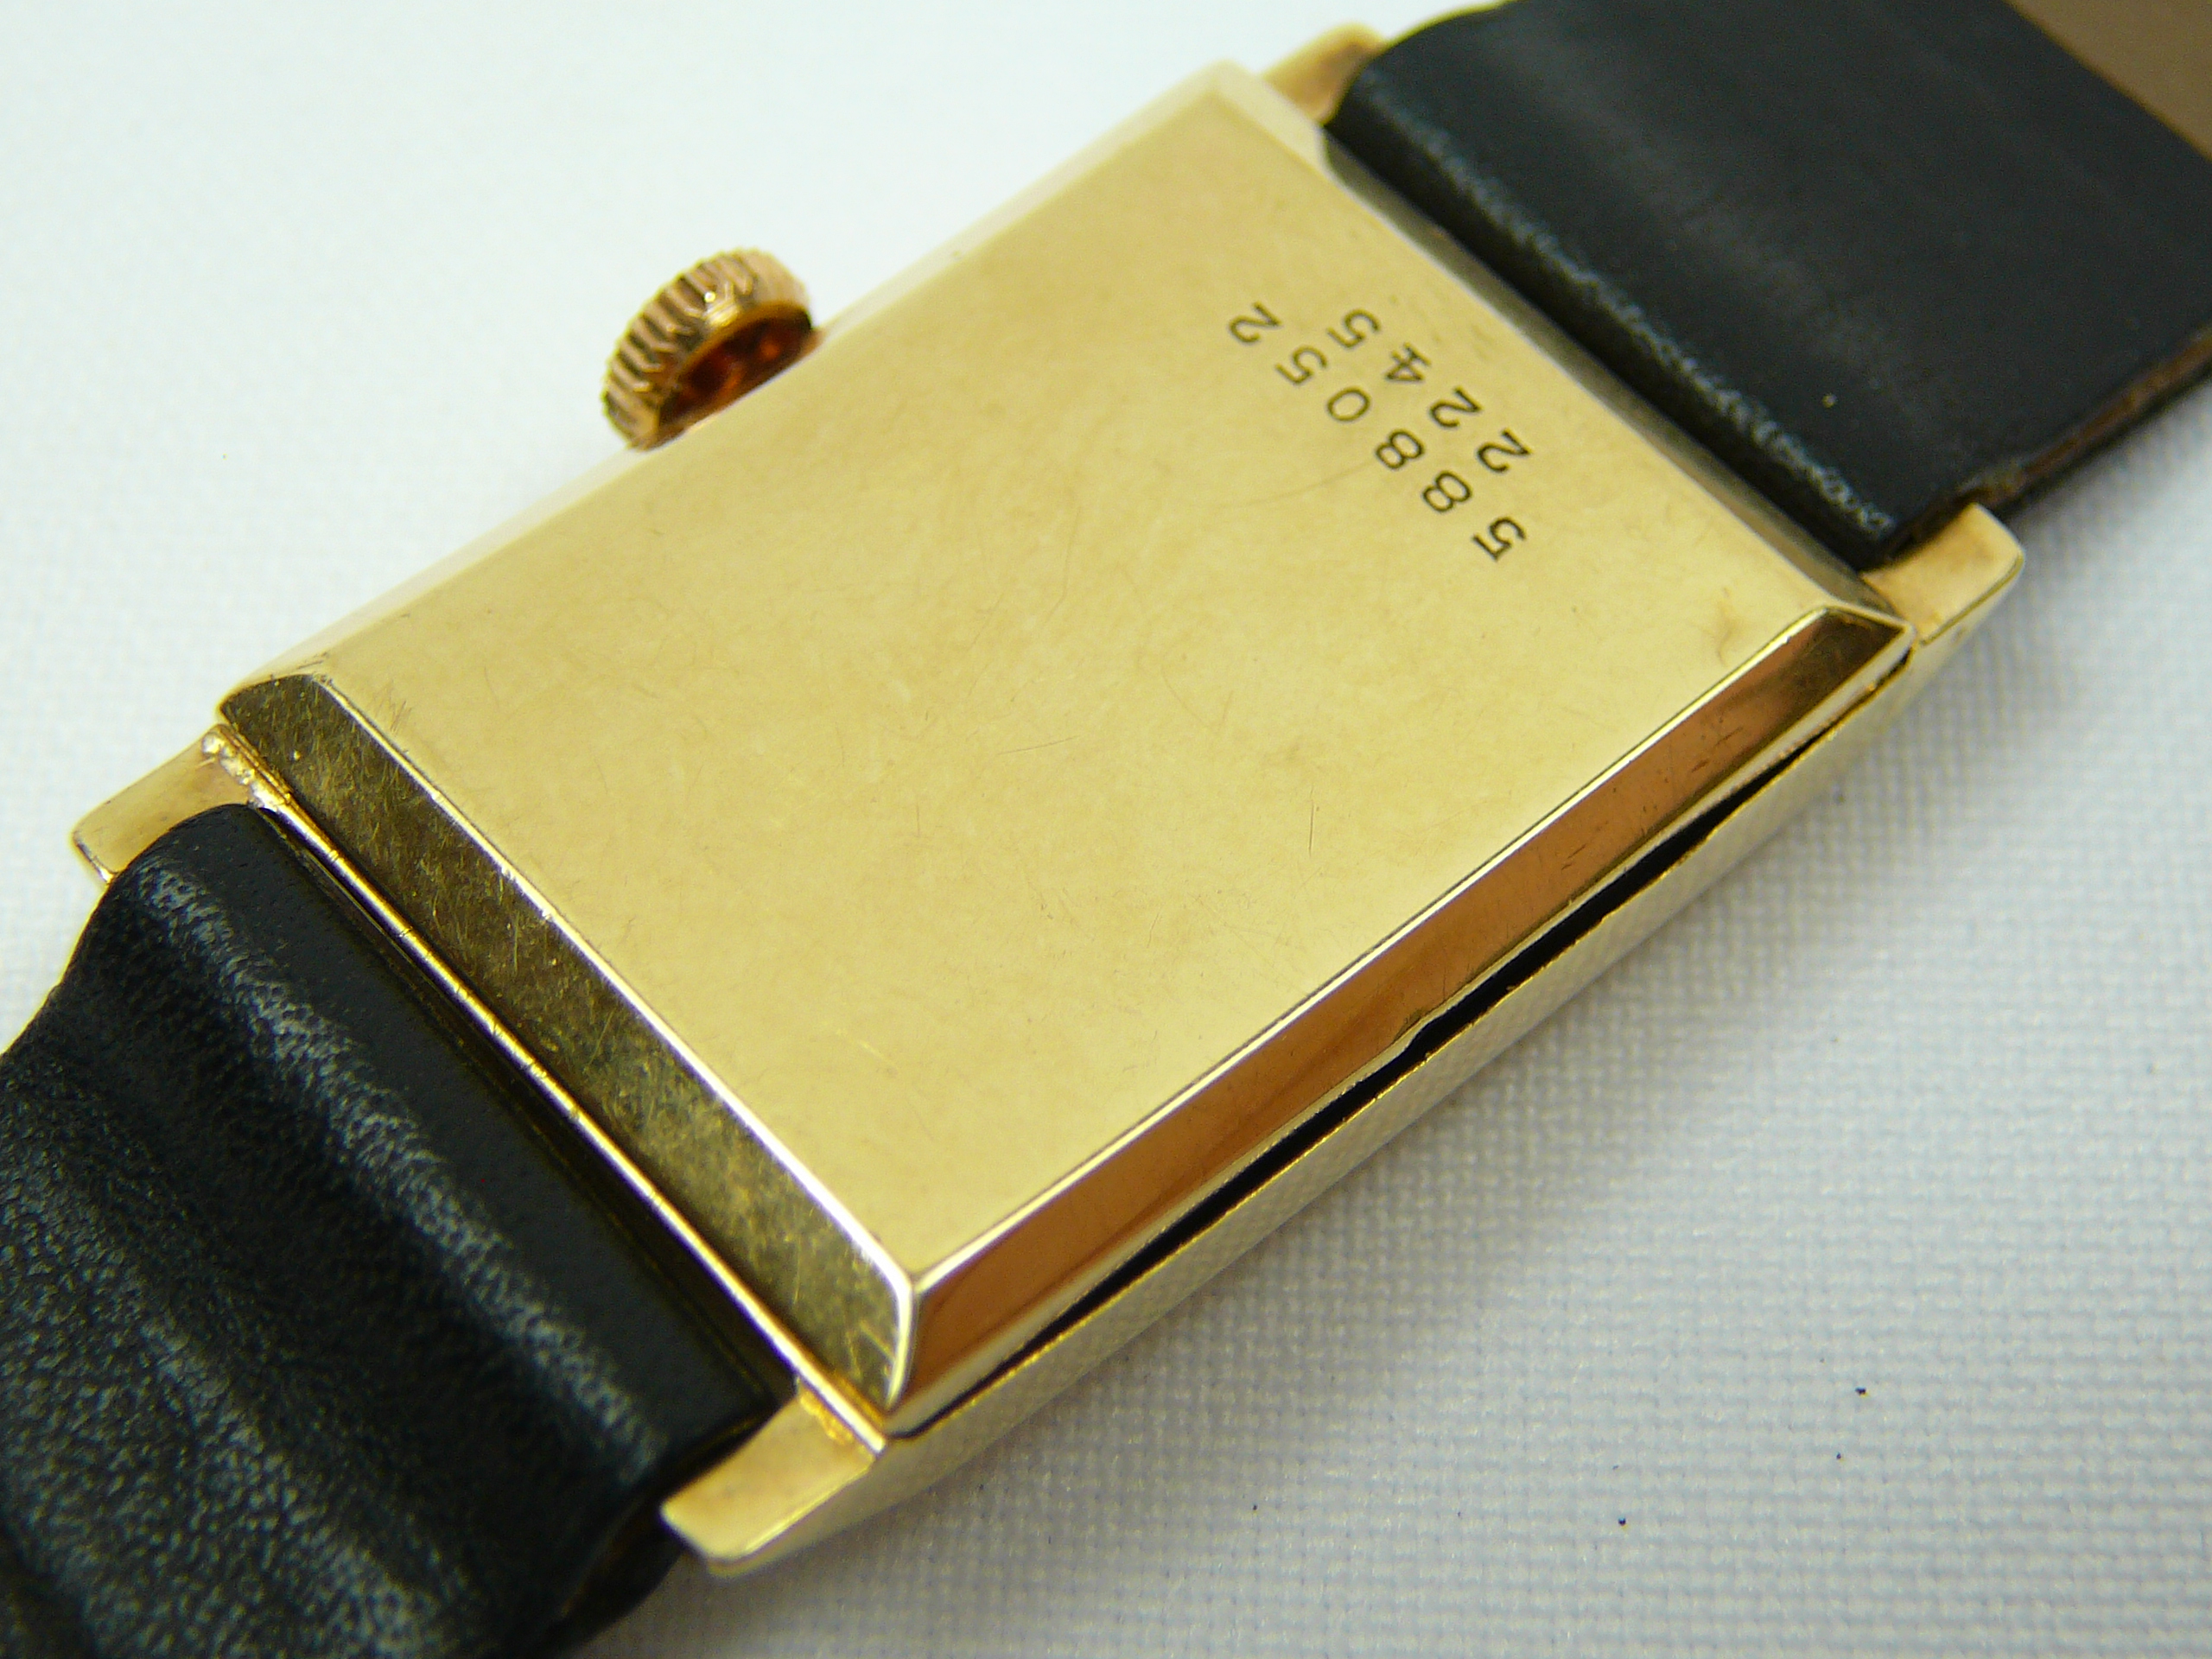 Gents vintage gold Rolex wrist watch - Image 3 of 6